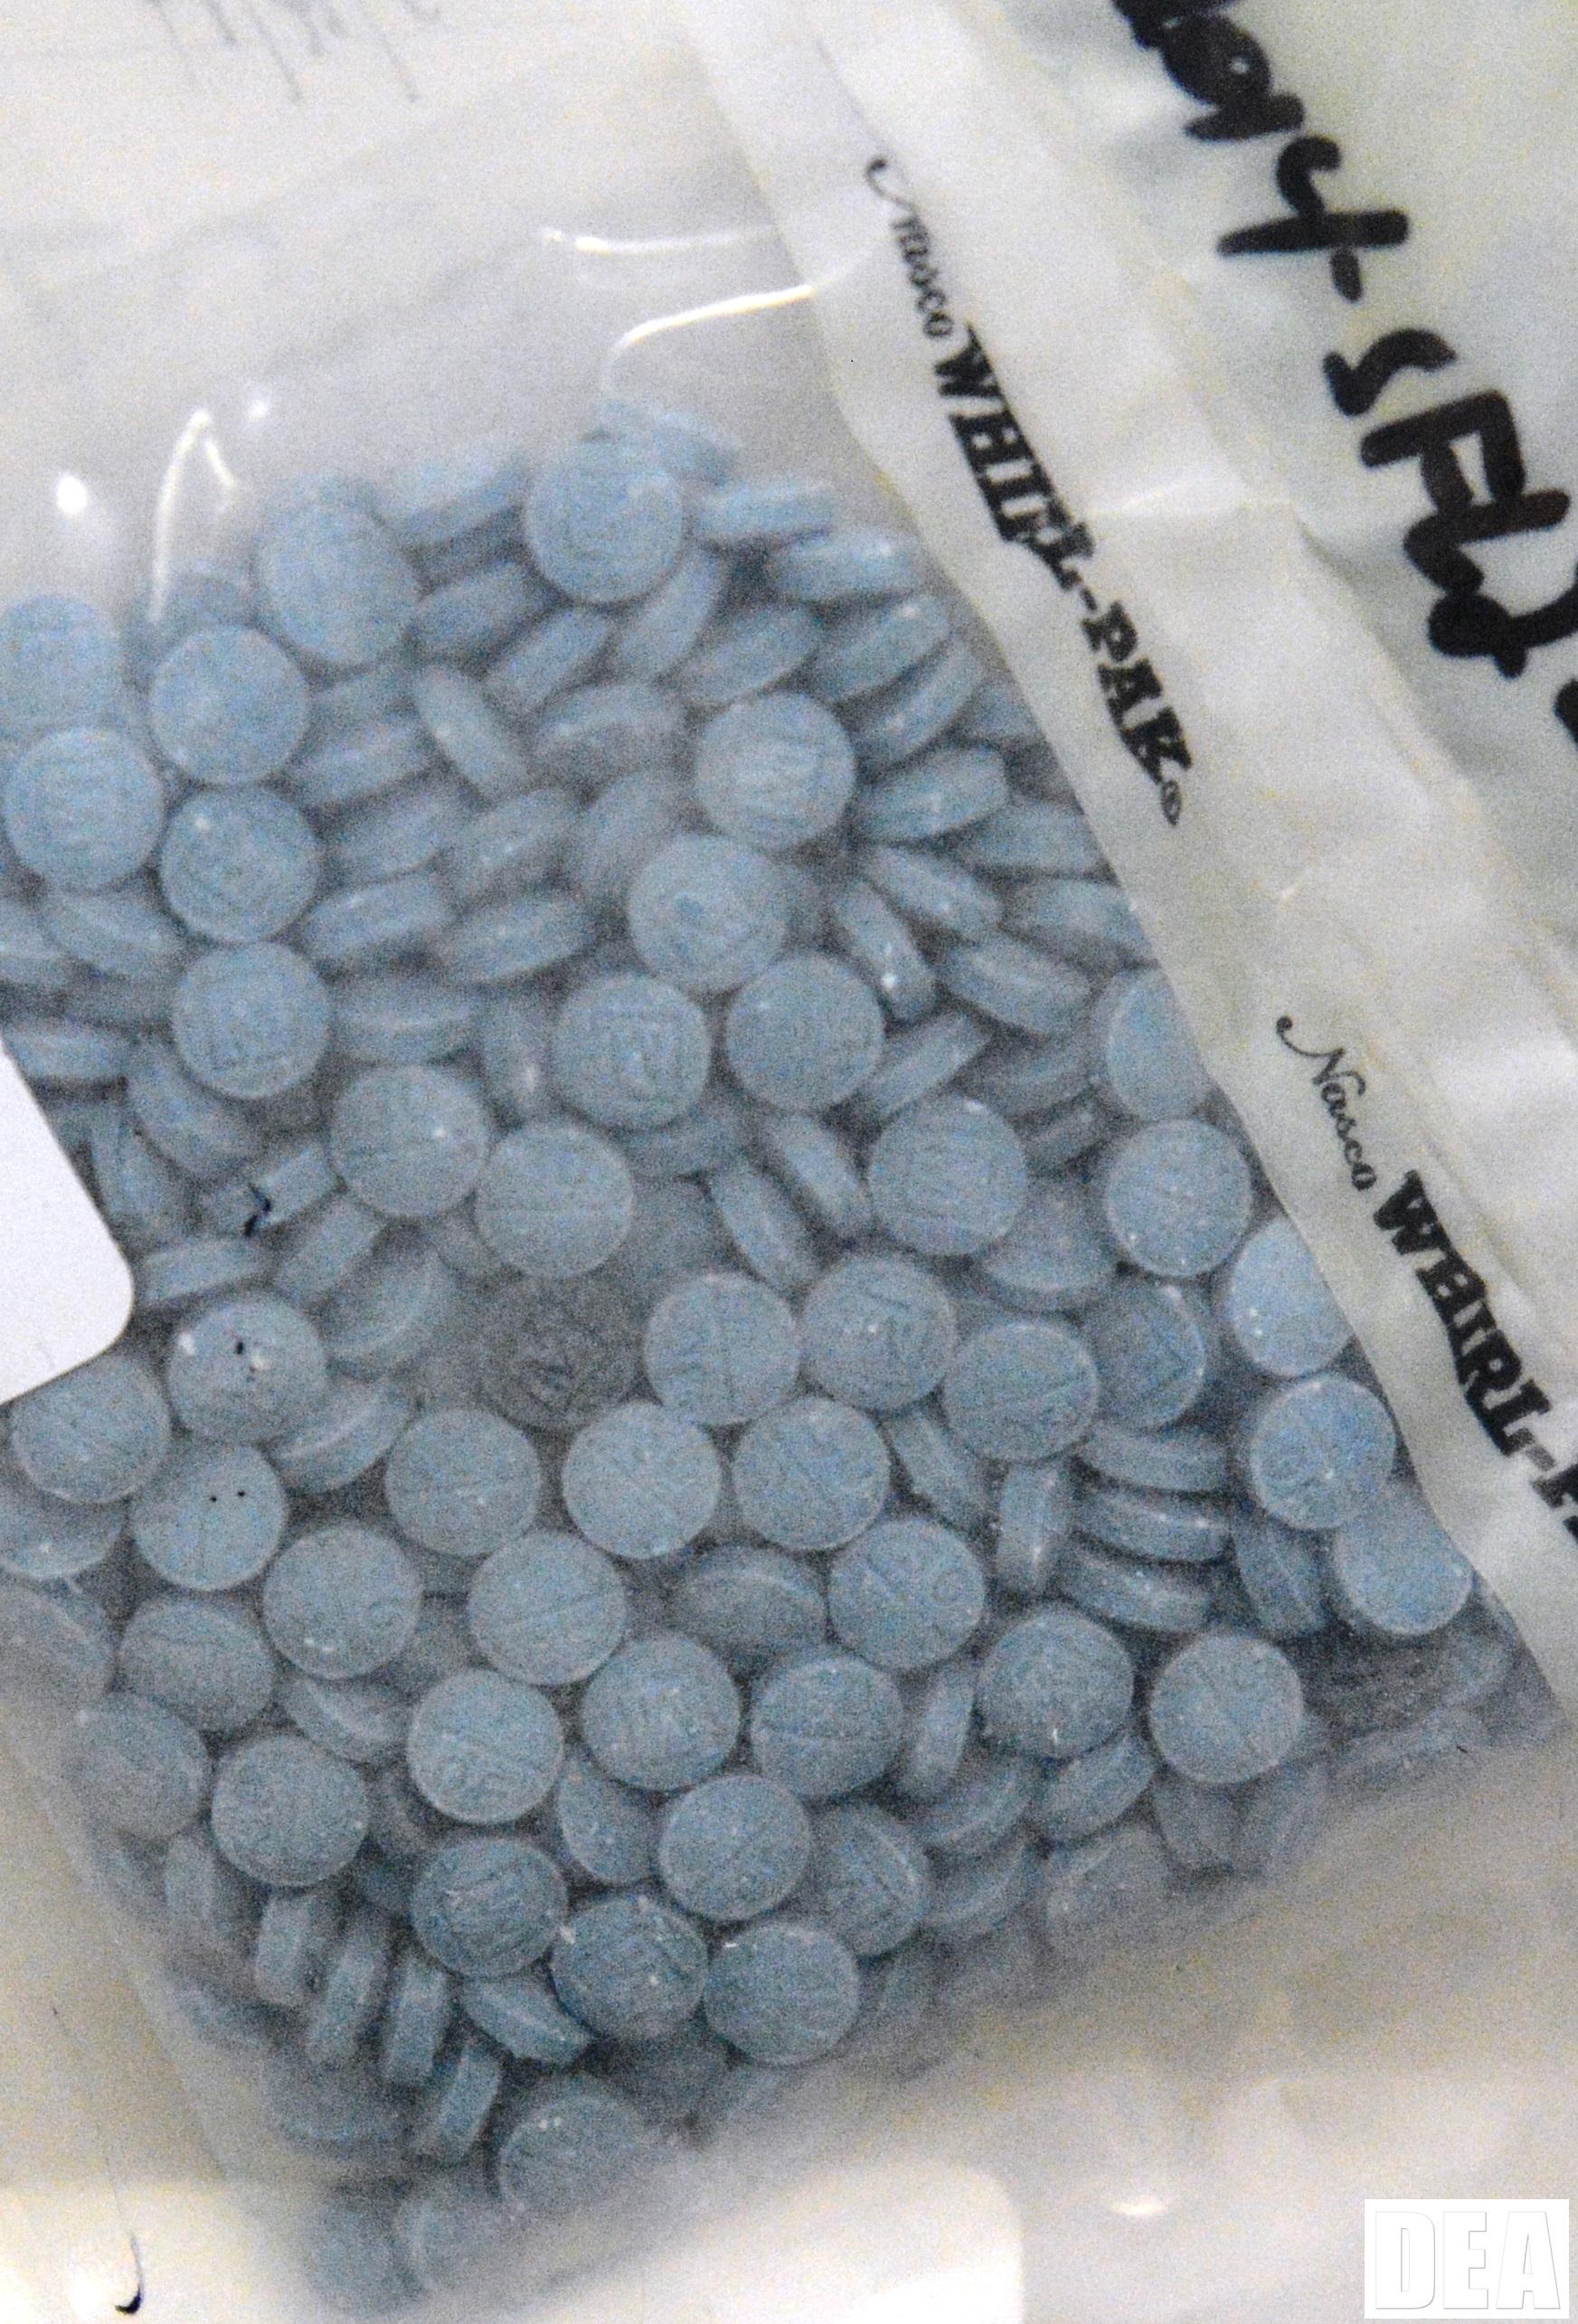 Heroin fentanyl pills. (Photo courtesy of the DEA)